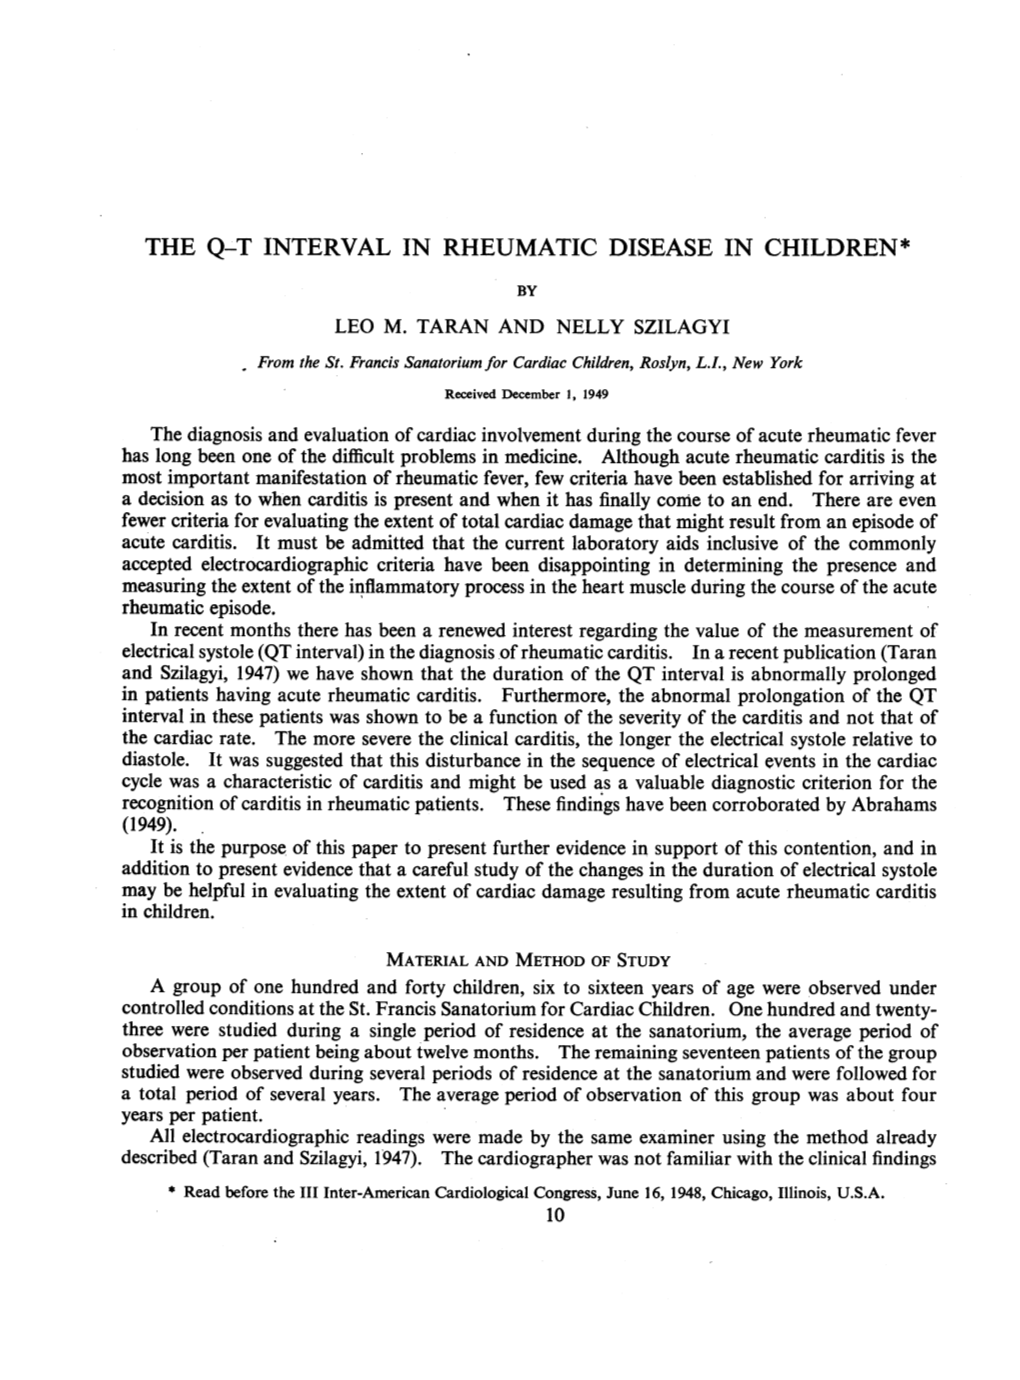 The Q-T Interval in Rheumatic Disease in Children*